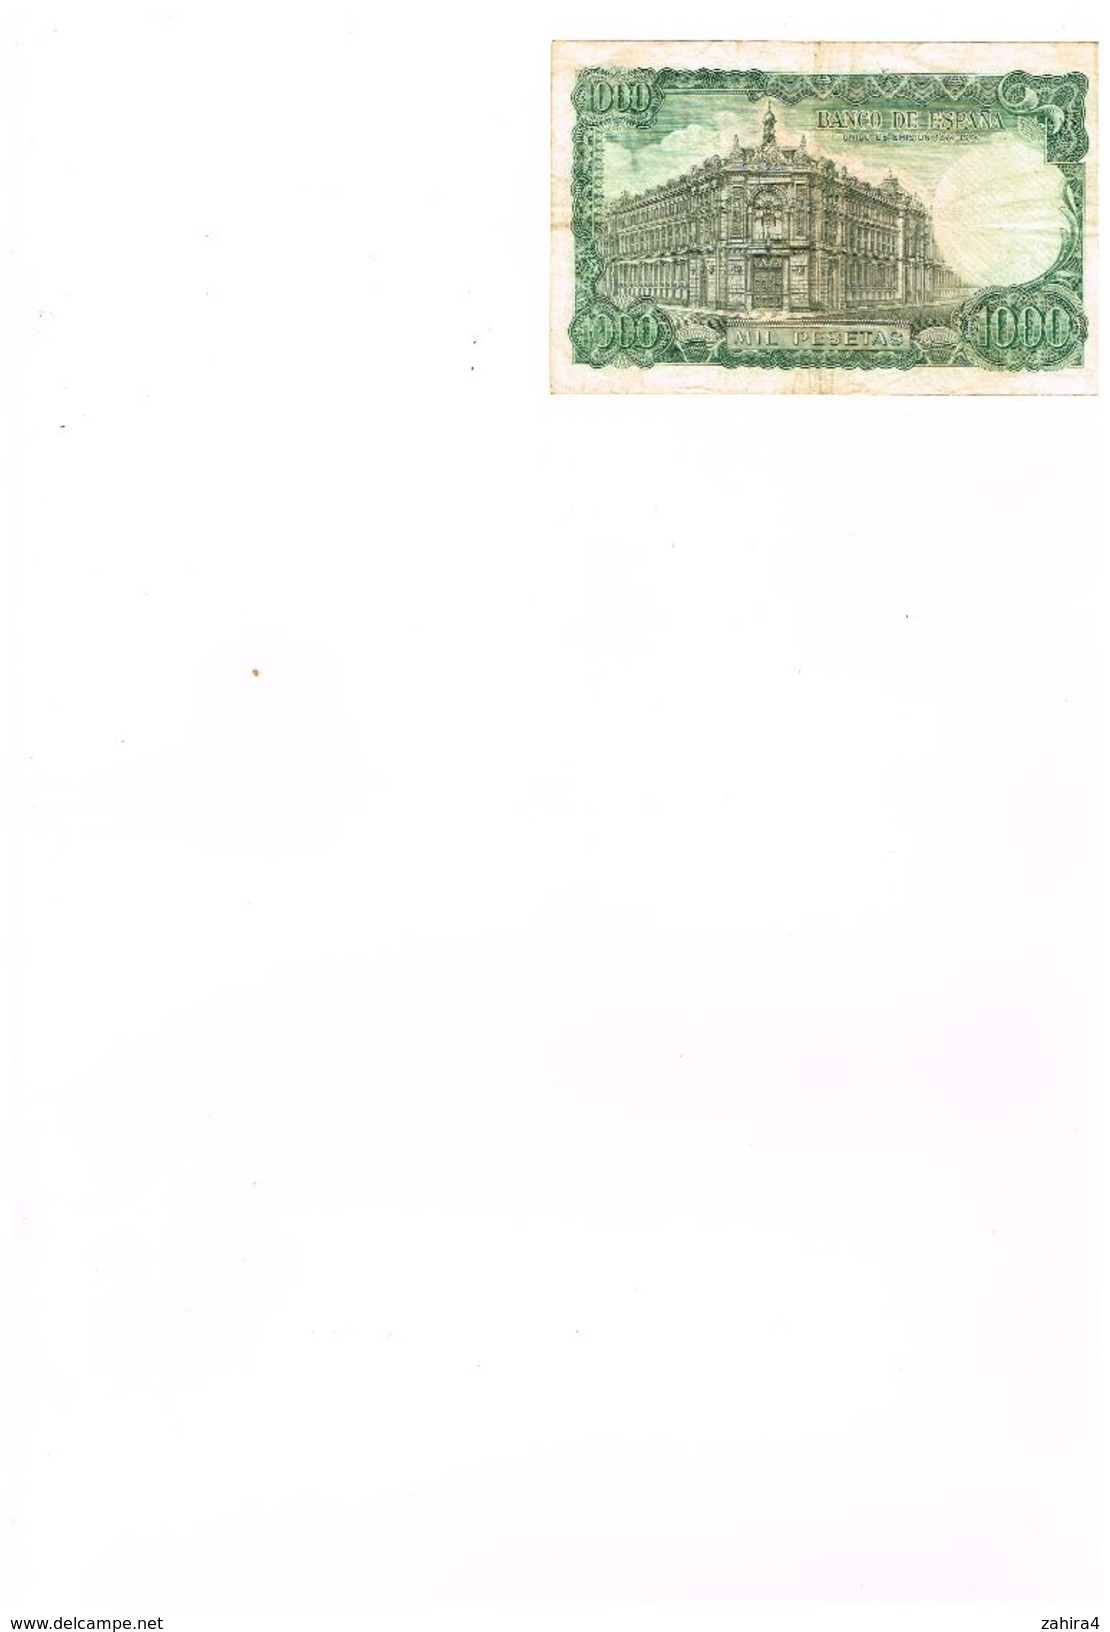 El Banco De Espana  1000 Pesetas Madrid 17 De Septiembre De 1971 - Jose Echegaray - 7570654 - 1000 Pesetas